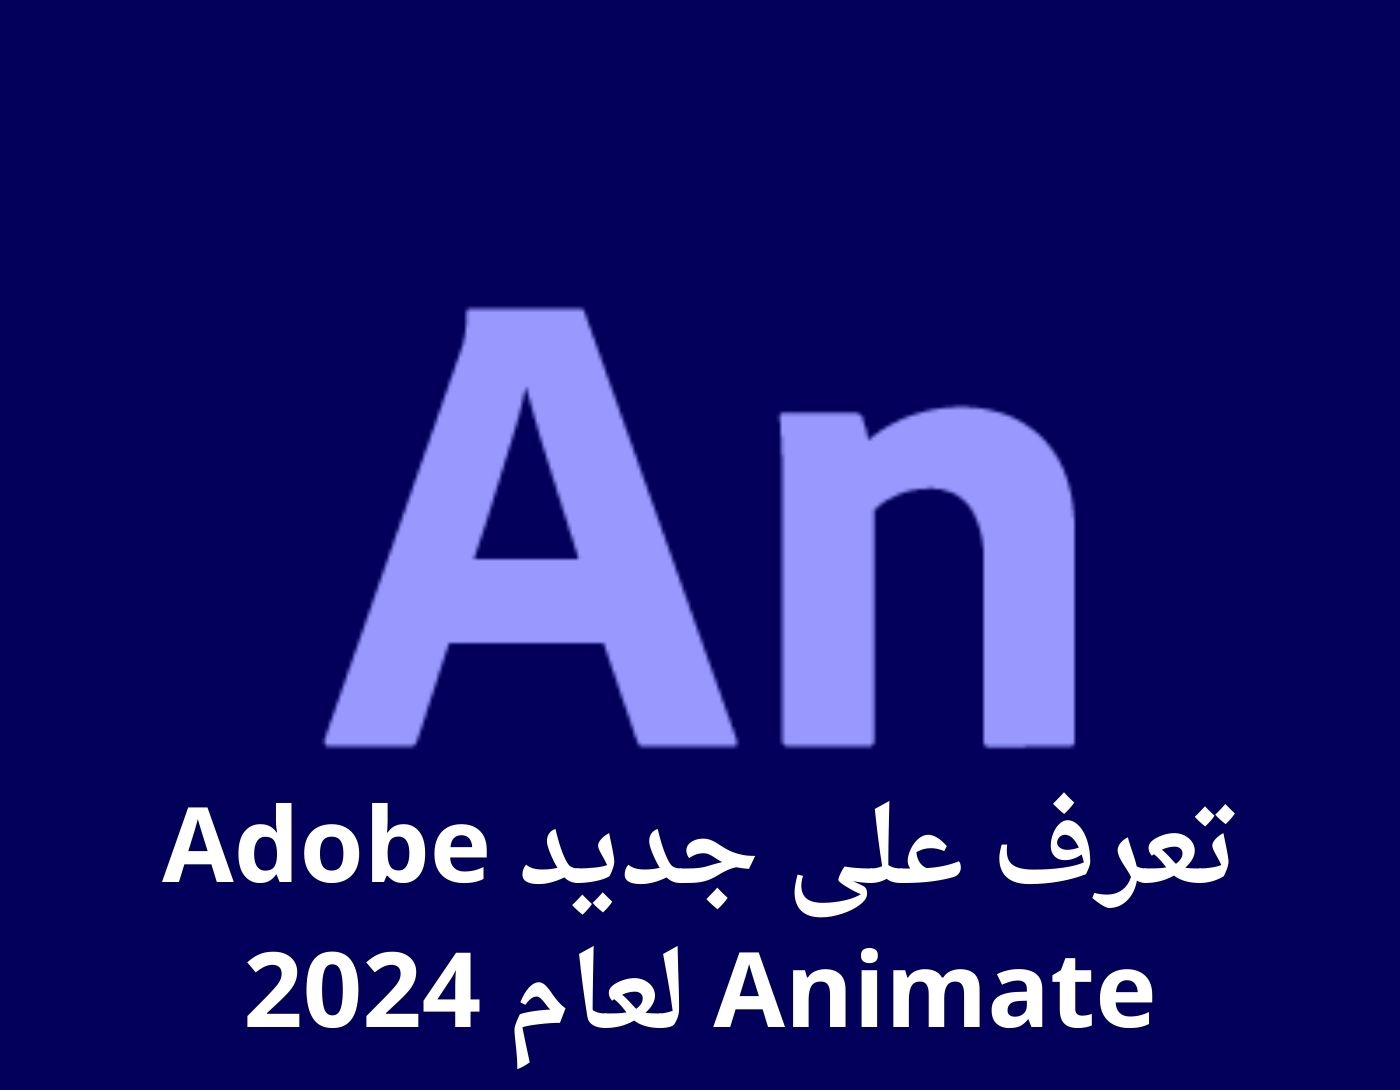 صورة واجهةبرنامجAdobe Animate لعام 2024